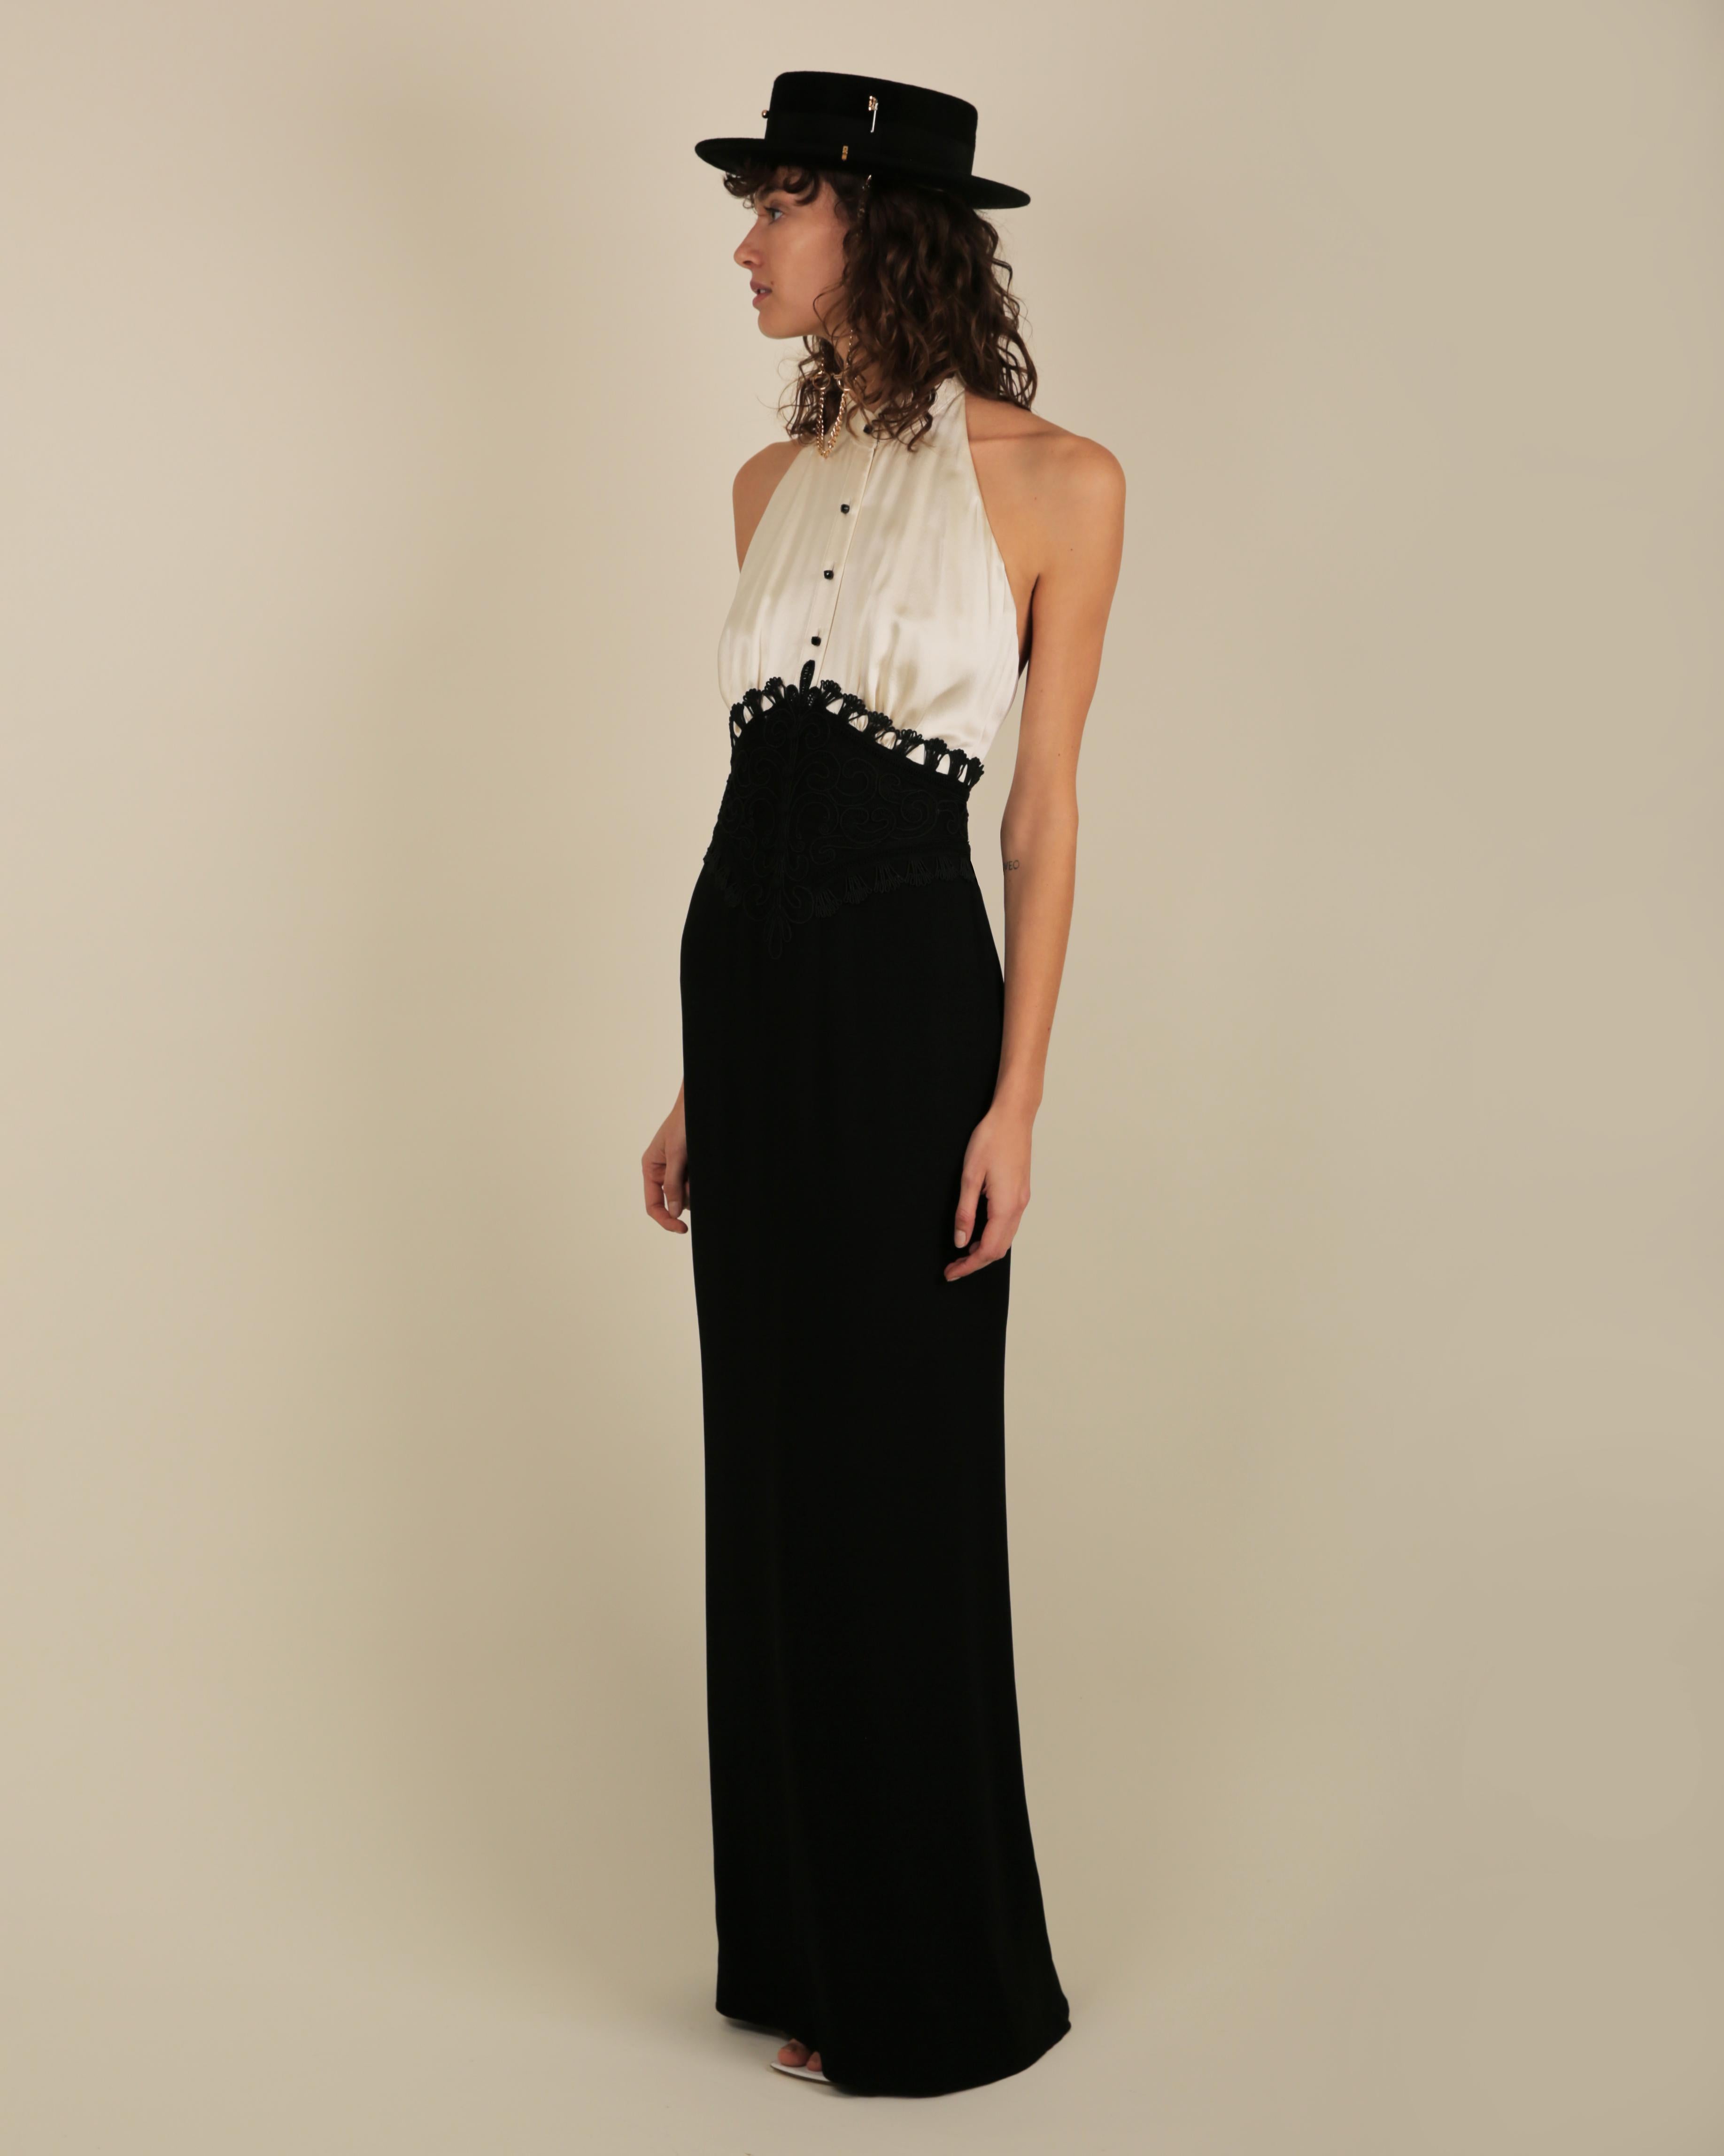 Ralph Lauren SS 2013 black white sleeveless halter backless button up dress gown For Sale 3